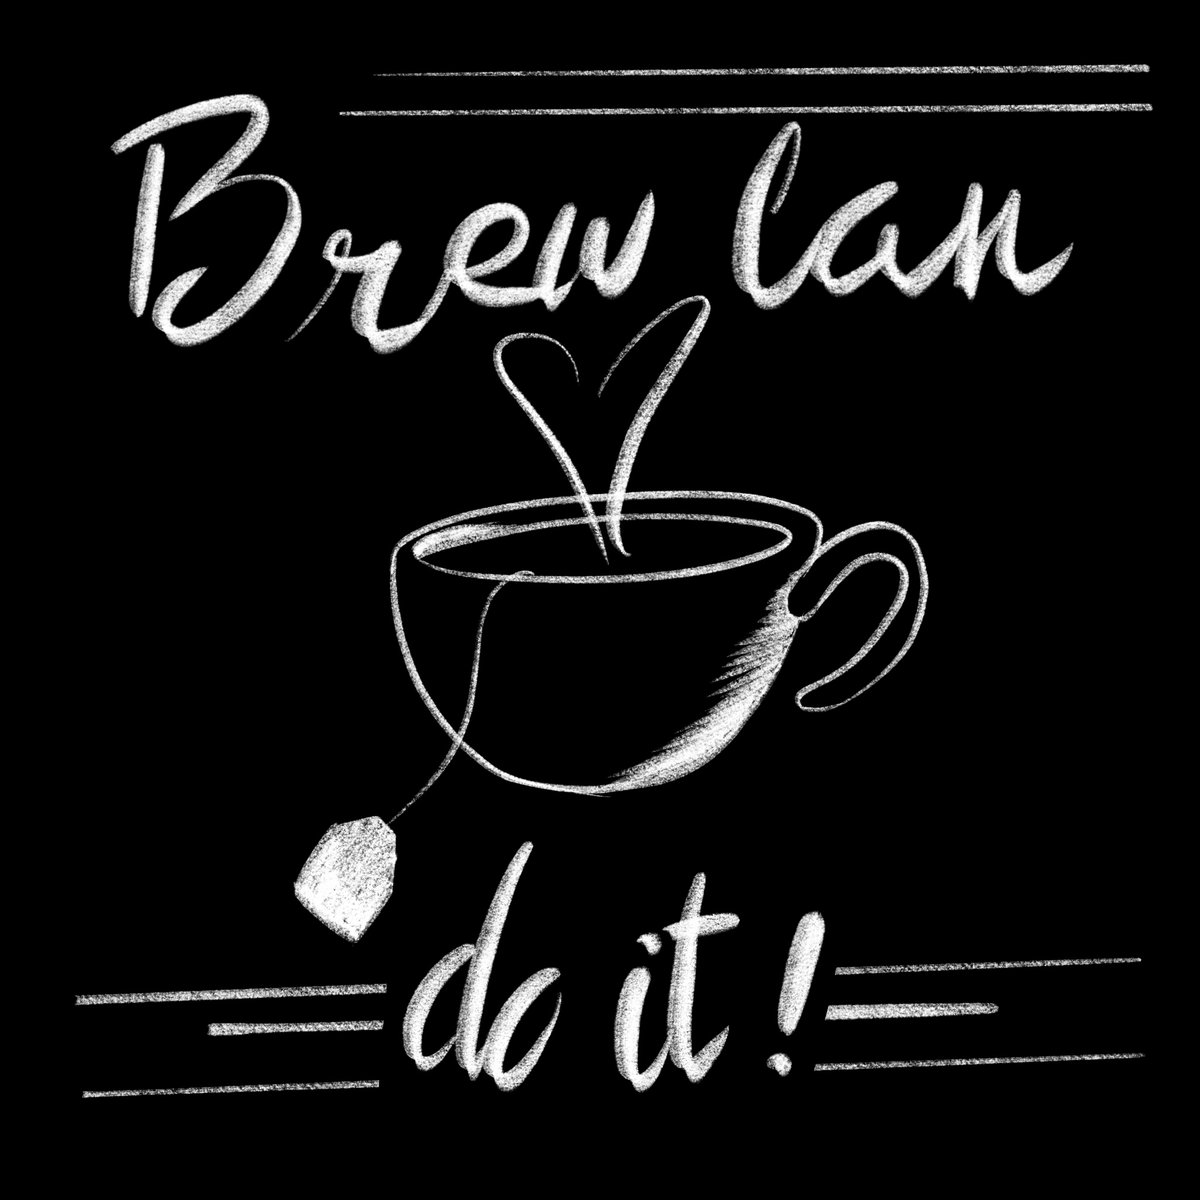 Your tea believes in you and I do too! #katyamycreative #art #digitalart #digitalillustration #illustration #illustrator #brewcandoit #pun #monochrome #blackandwhite #ArtistOnTwitter